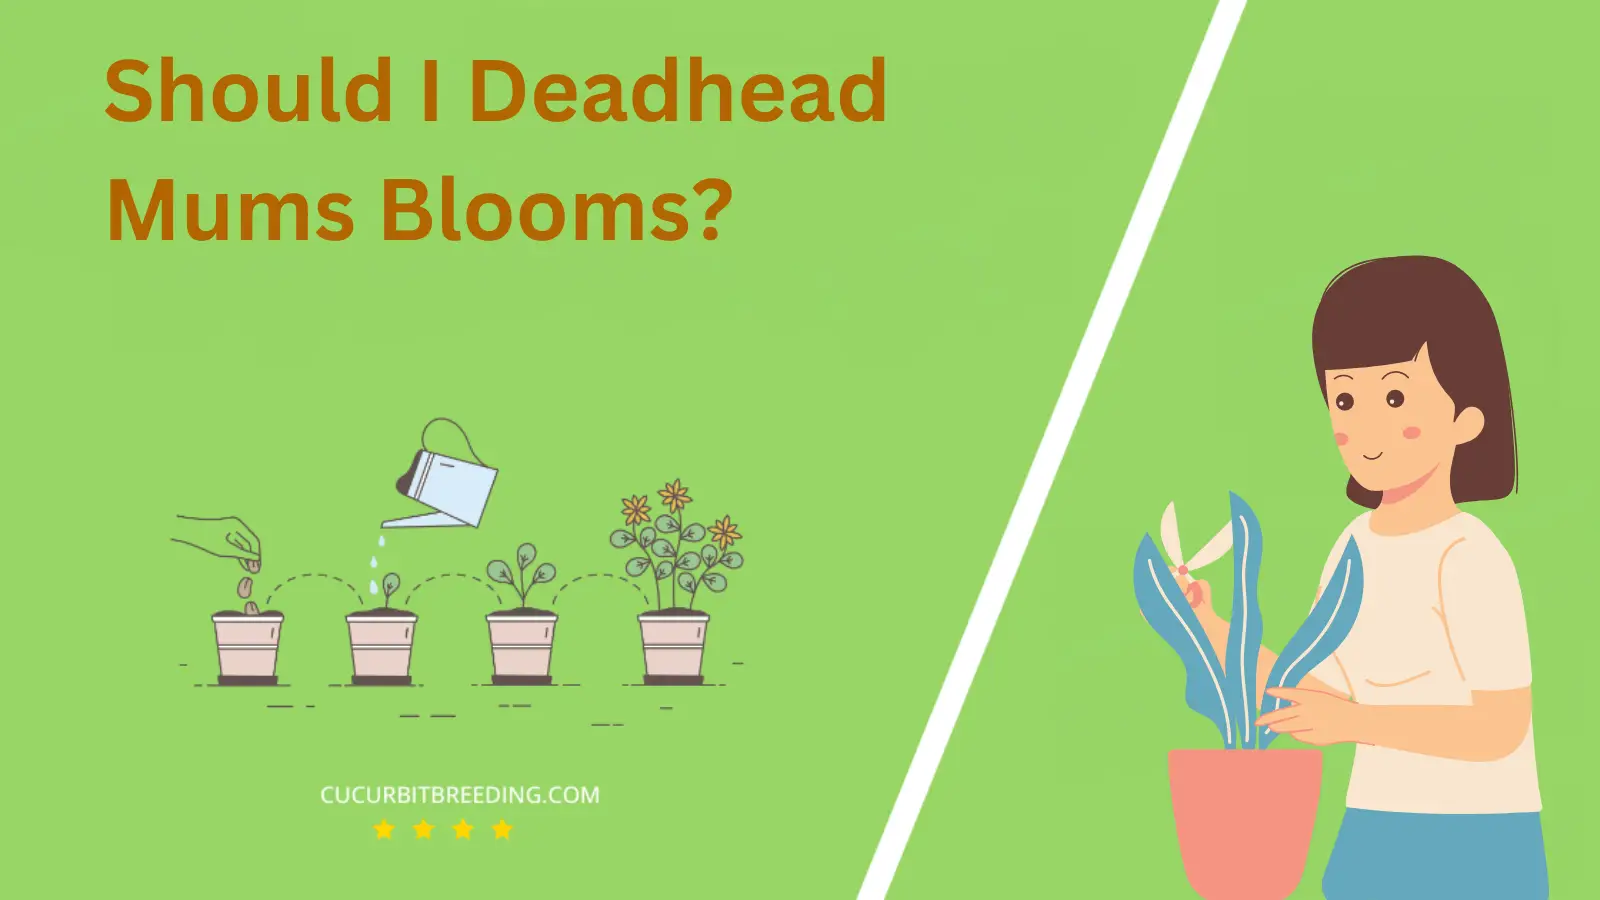 Should I Deadhead Mums Blooms?